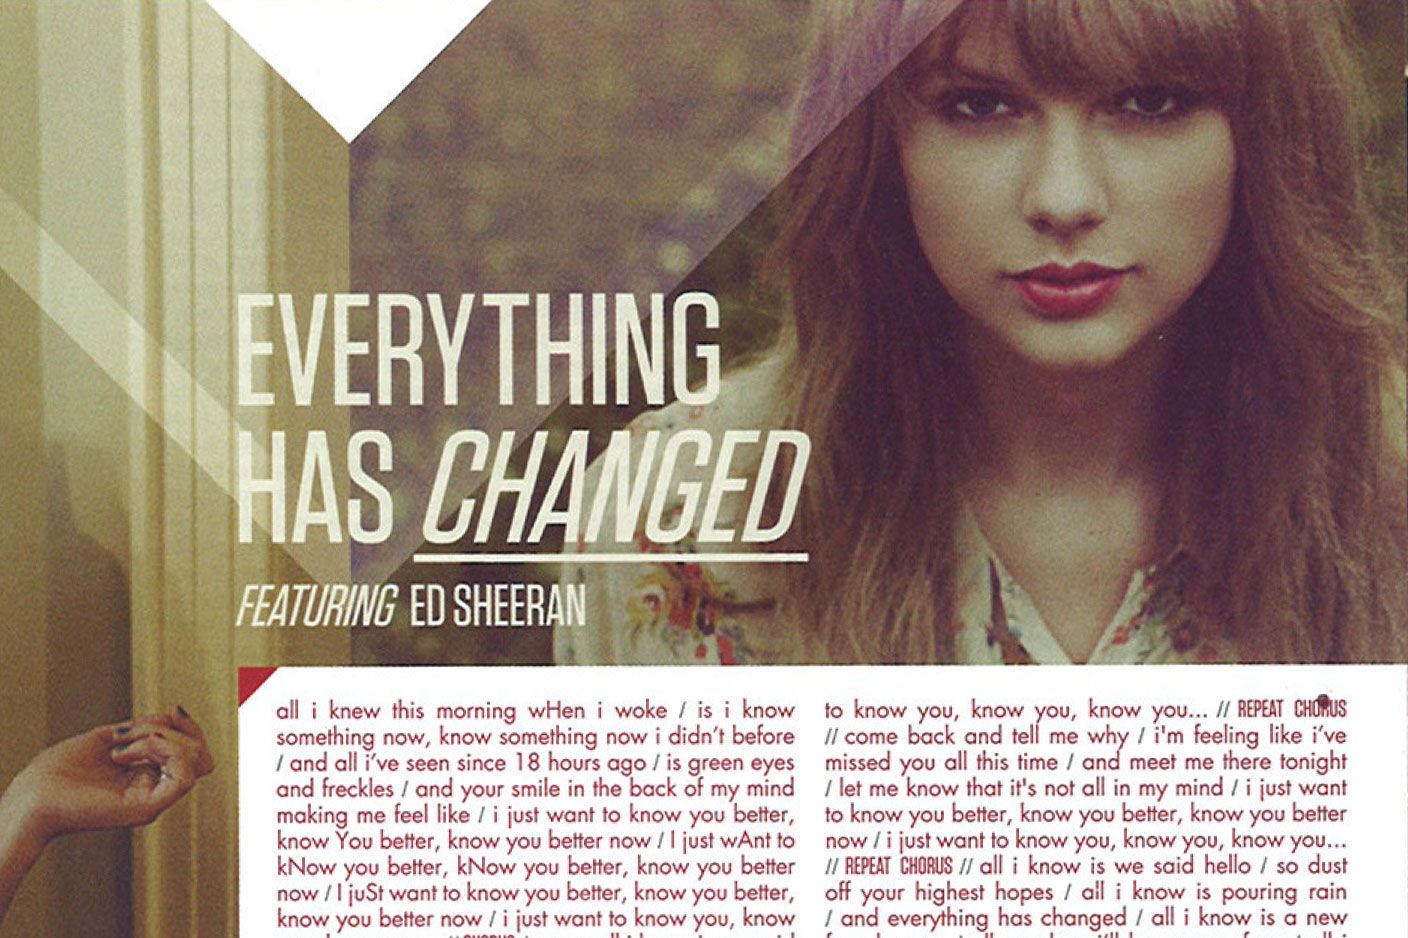 Has anyone seen this Taylor Swift CD before ?? : r/TaylorSwiftMerch